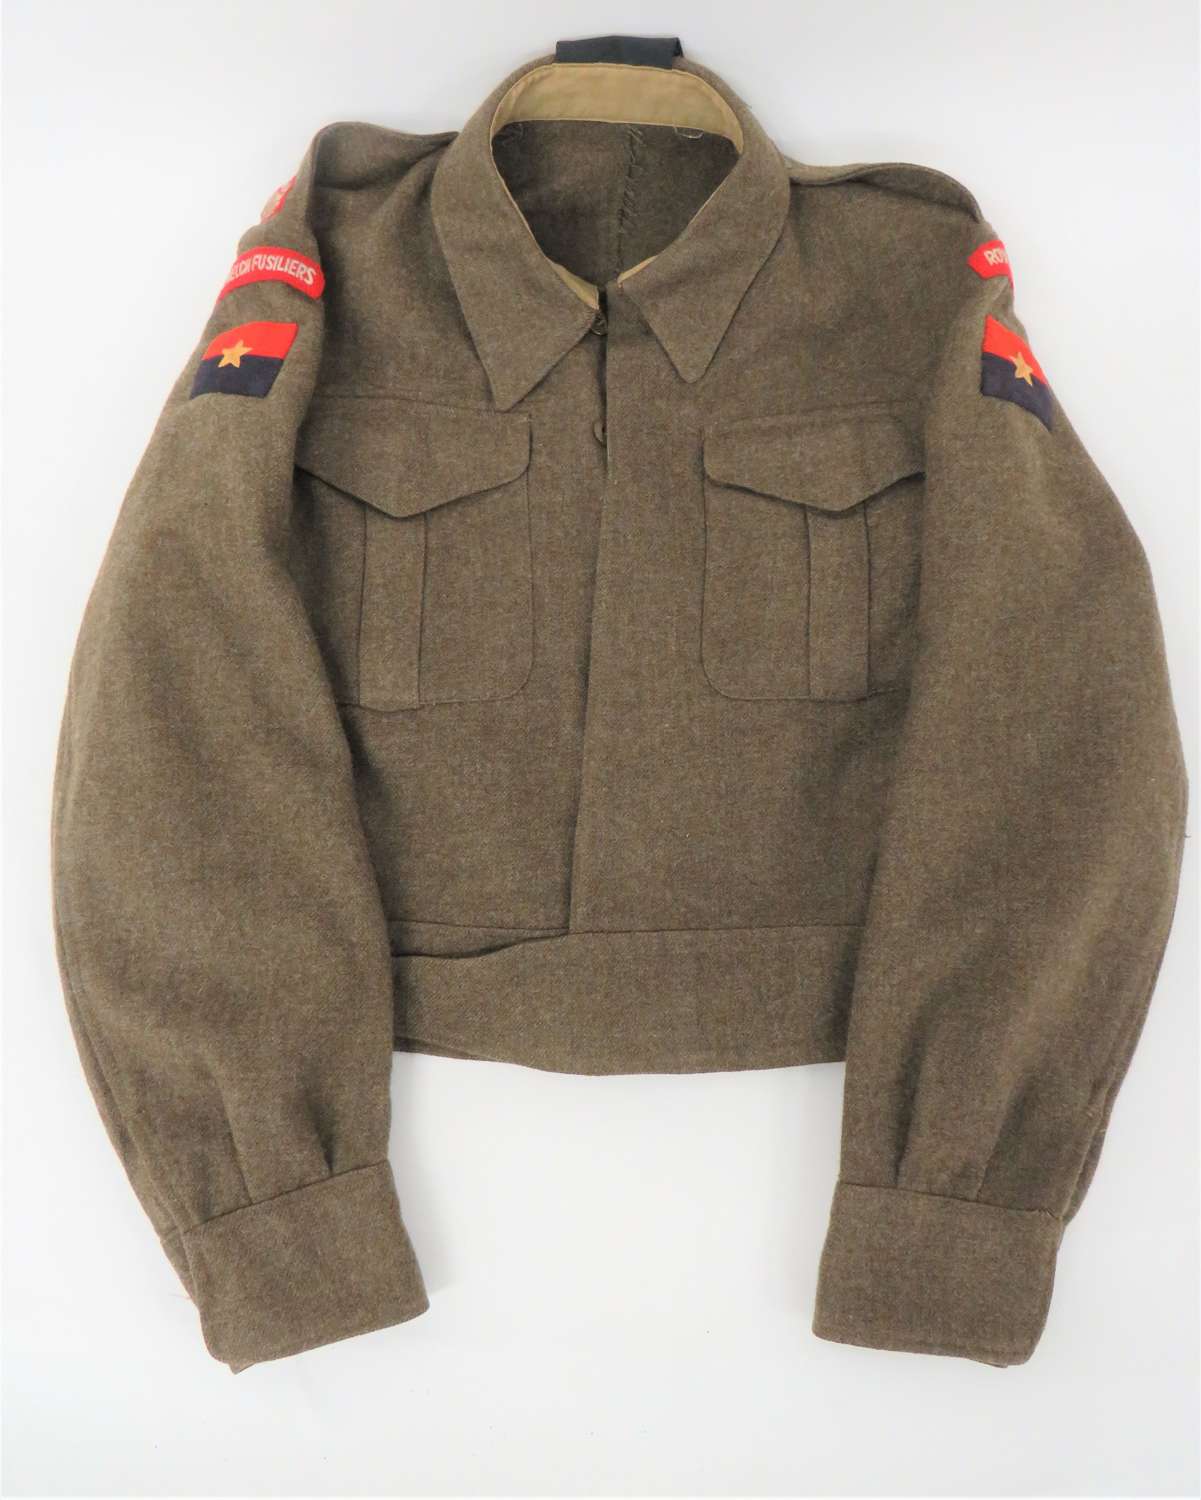 WW2 Royal Welch Fusiliers Officers Battle dress Jacket